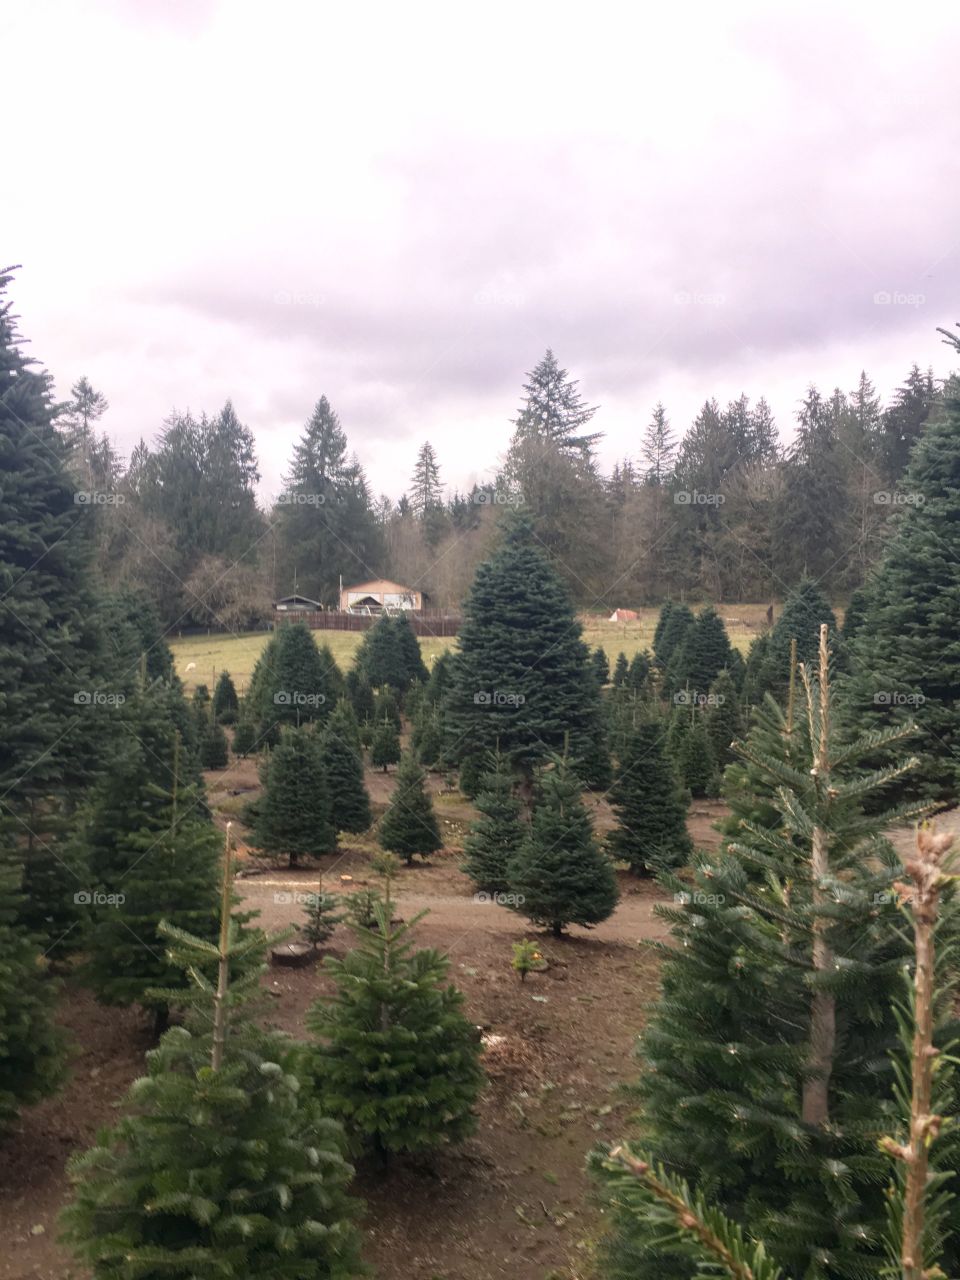 Christmas tree farm in the Northwest! 